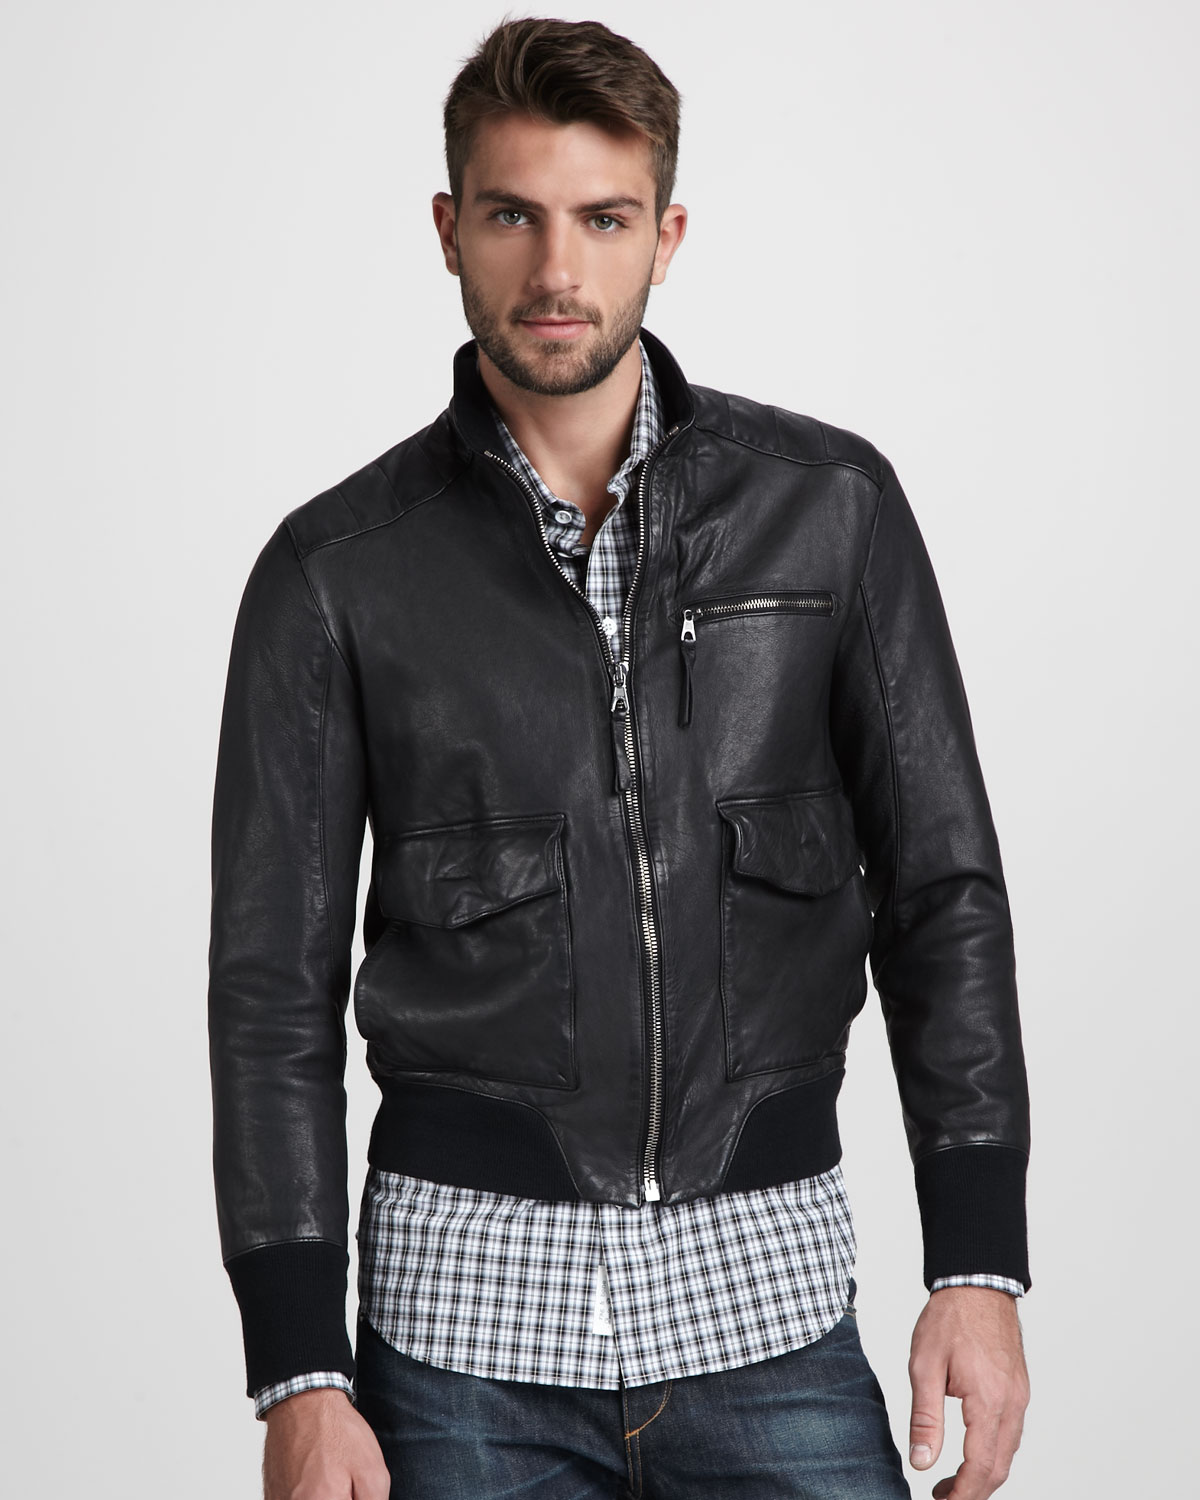 Rag & bone Hughes Leather Jacket in Black for Men | Lyst